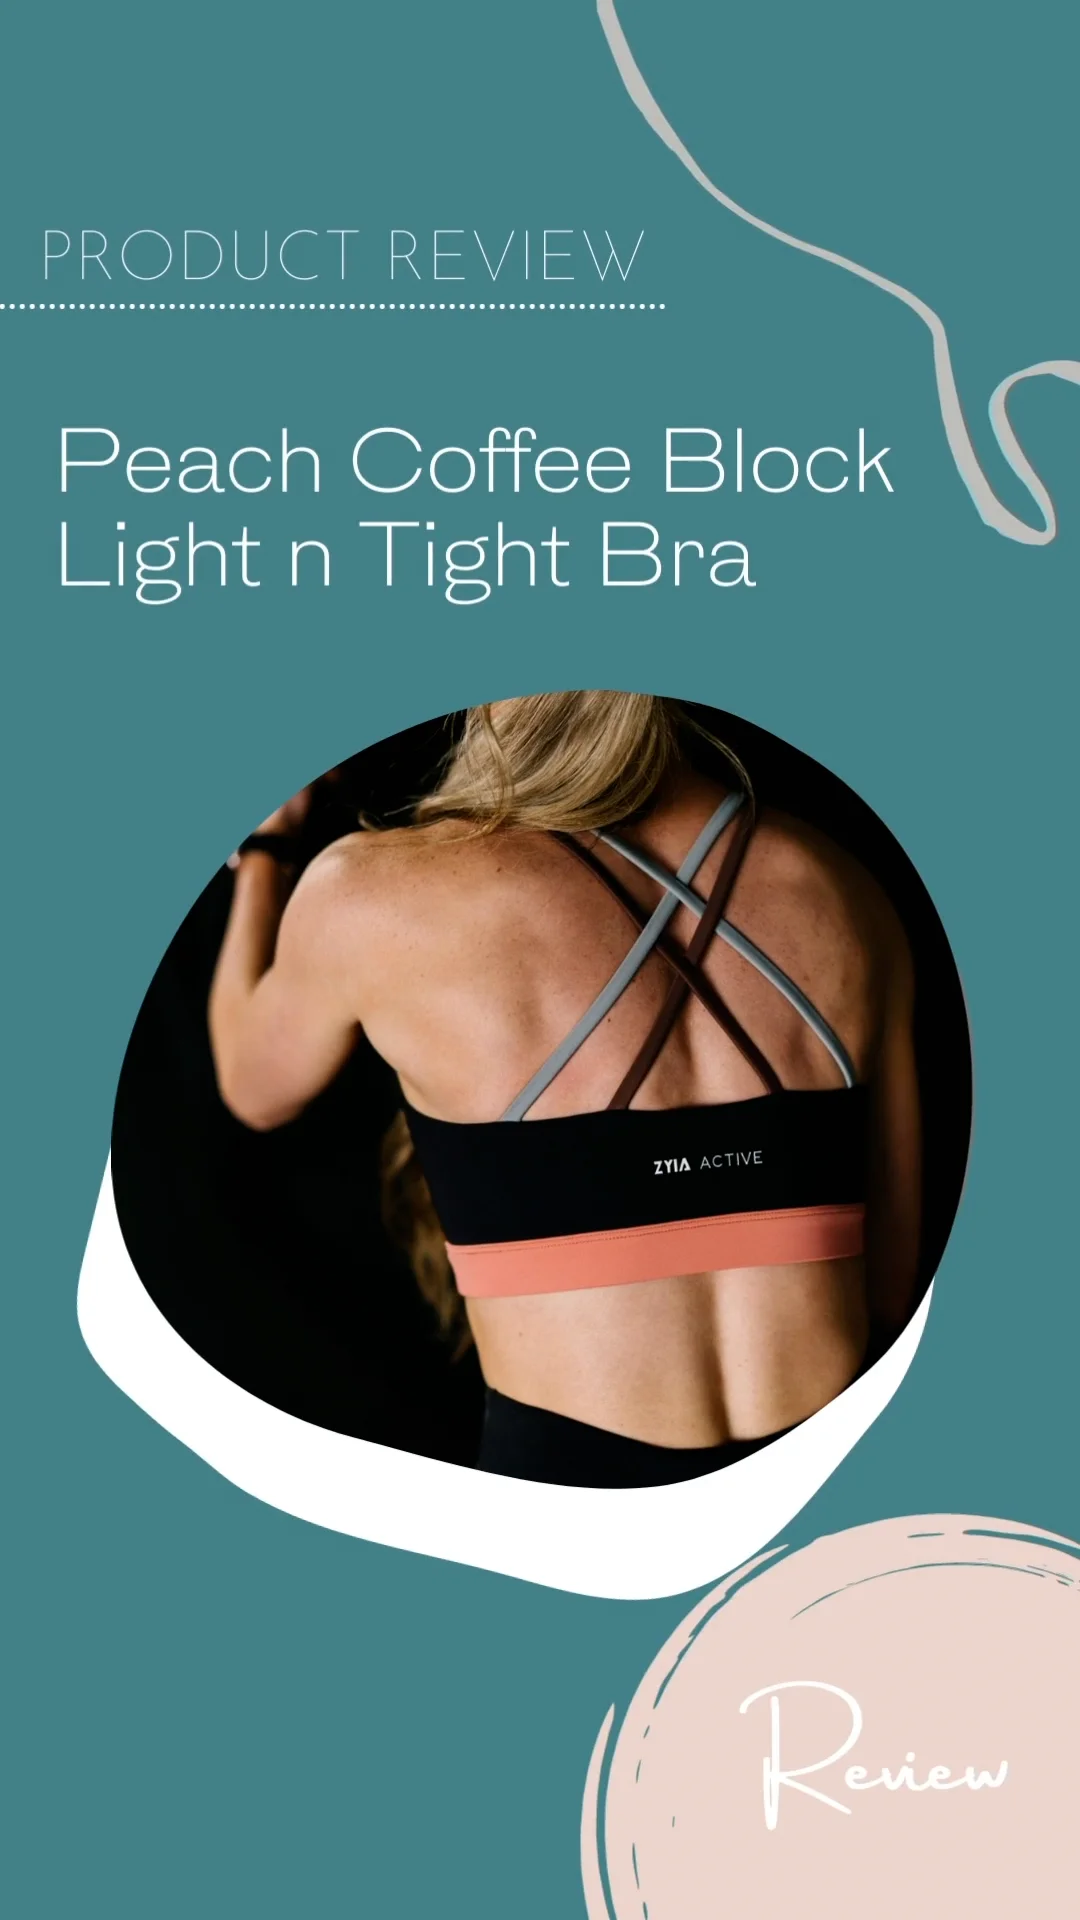 Peach Coffee Block Light n Tight Bra #3107 on Vimeo